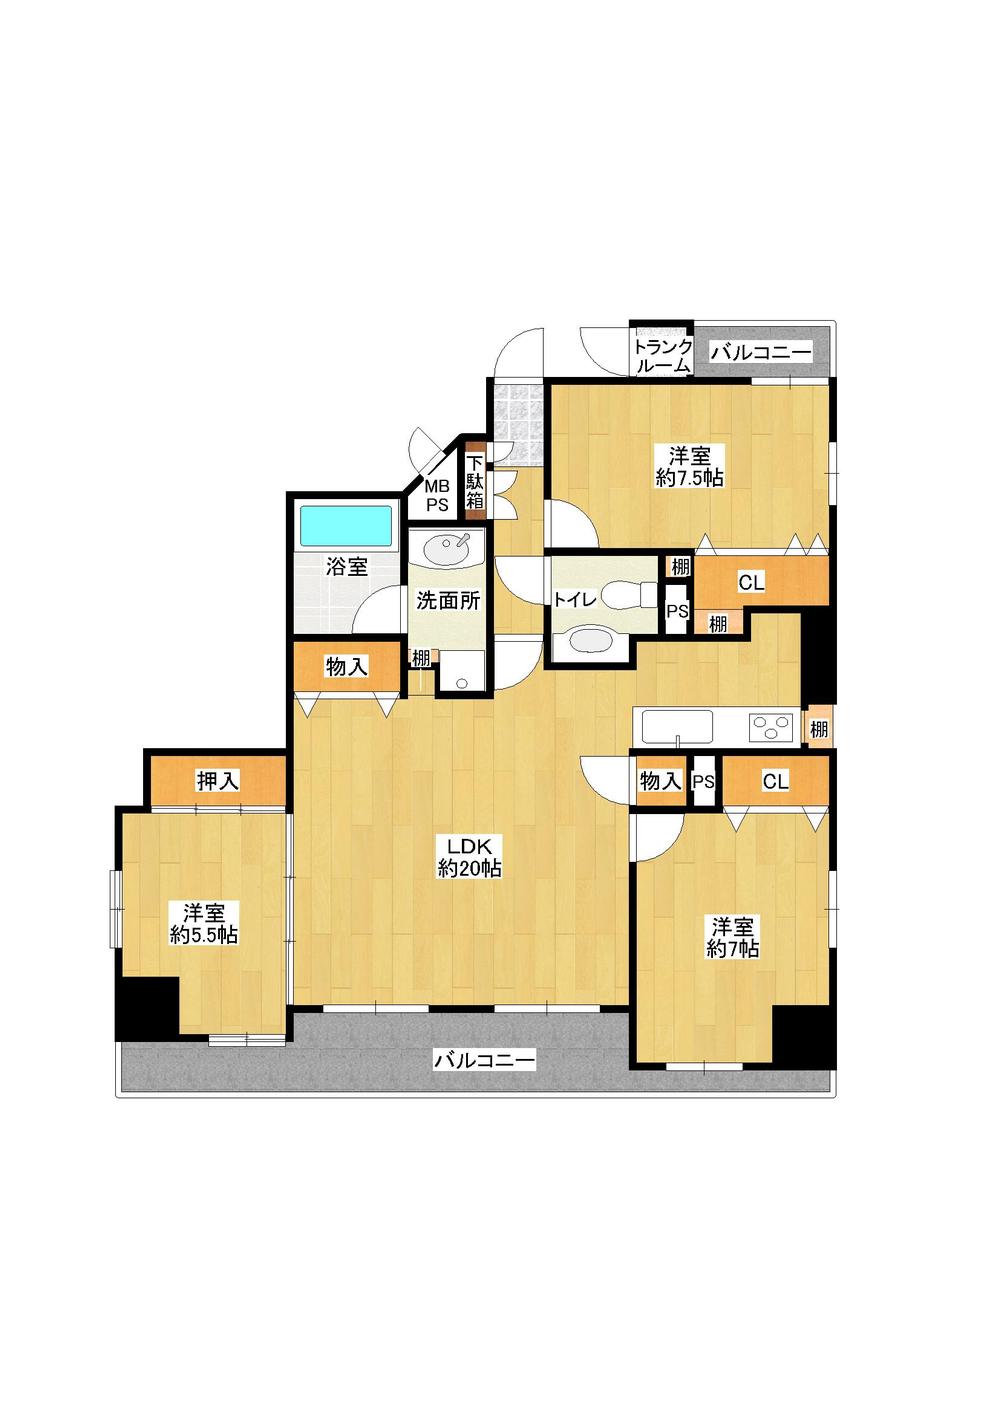 Floor plan. 3LDK, Price 31,400,000 yen, Footprint 86.7 sq m , Balcony area 12.56 sq m